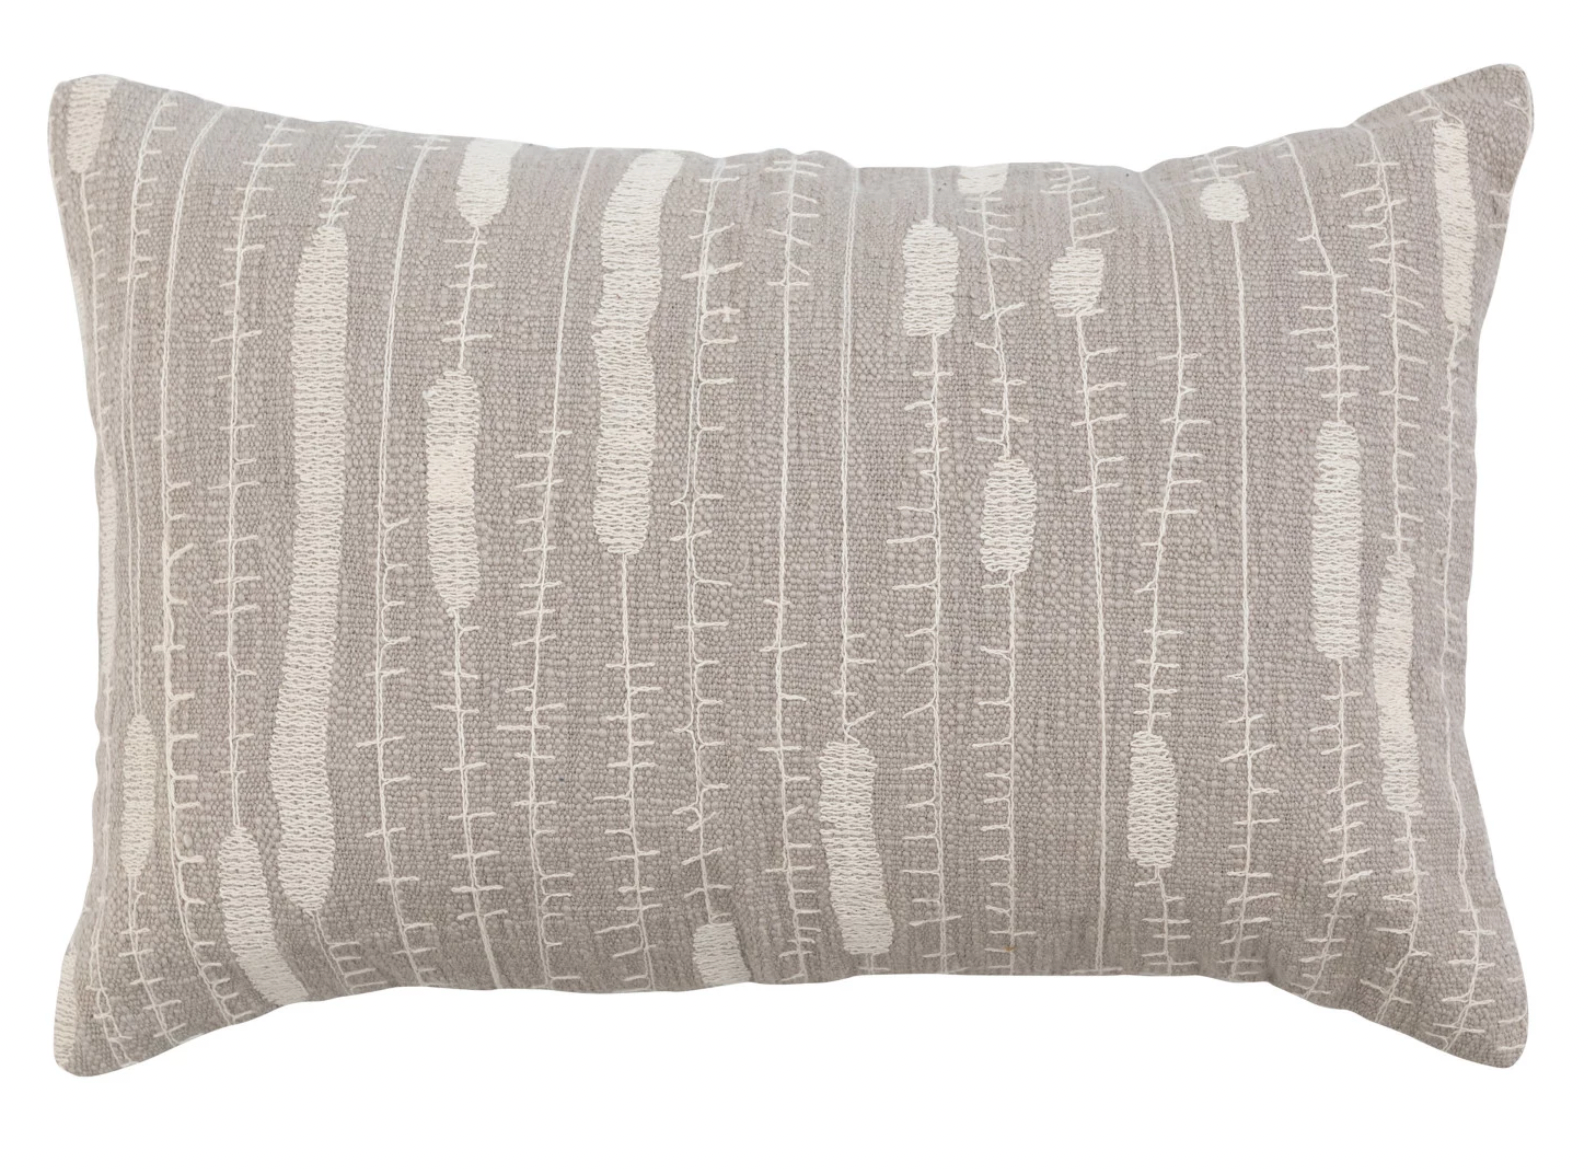 24" x 16" Cotton Lumbar Pillow w/ Embroidery